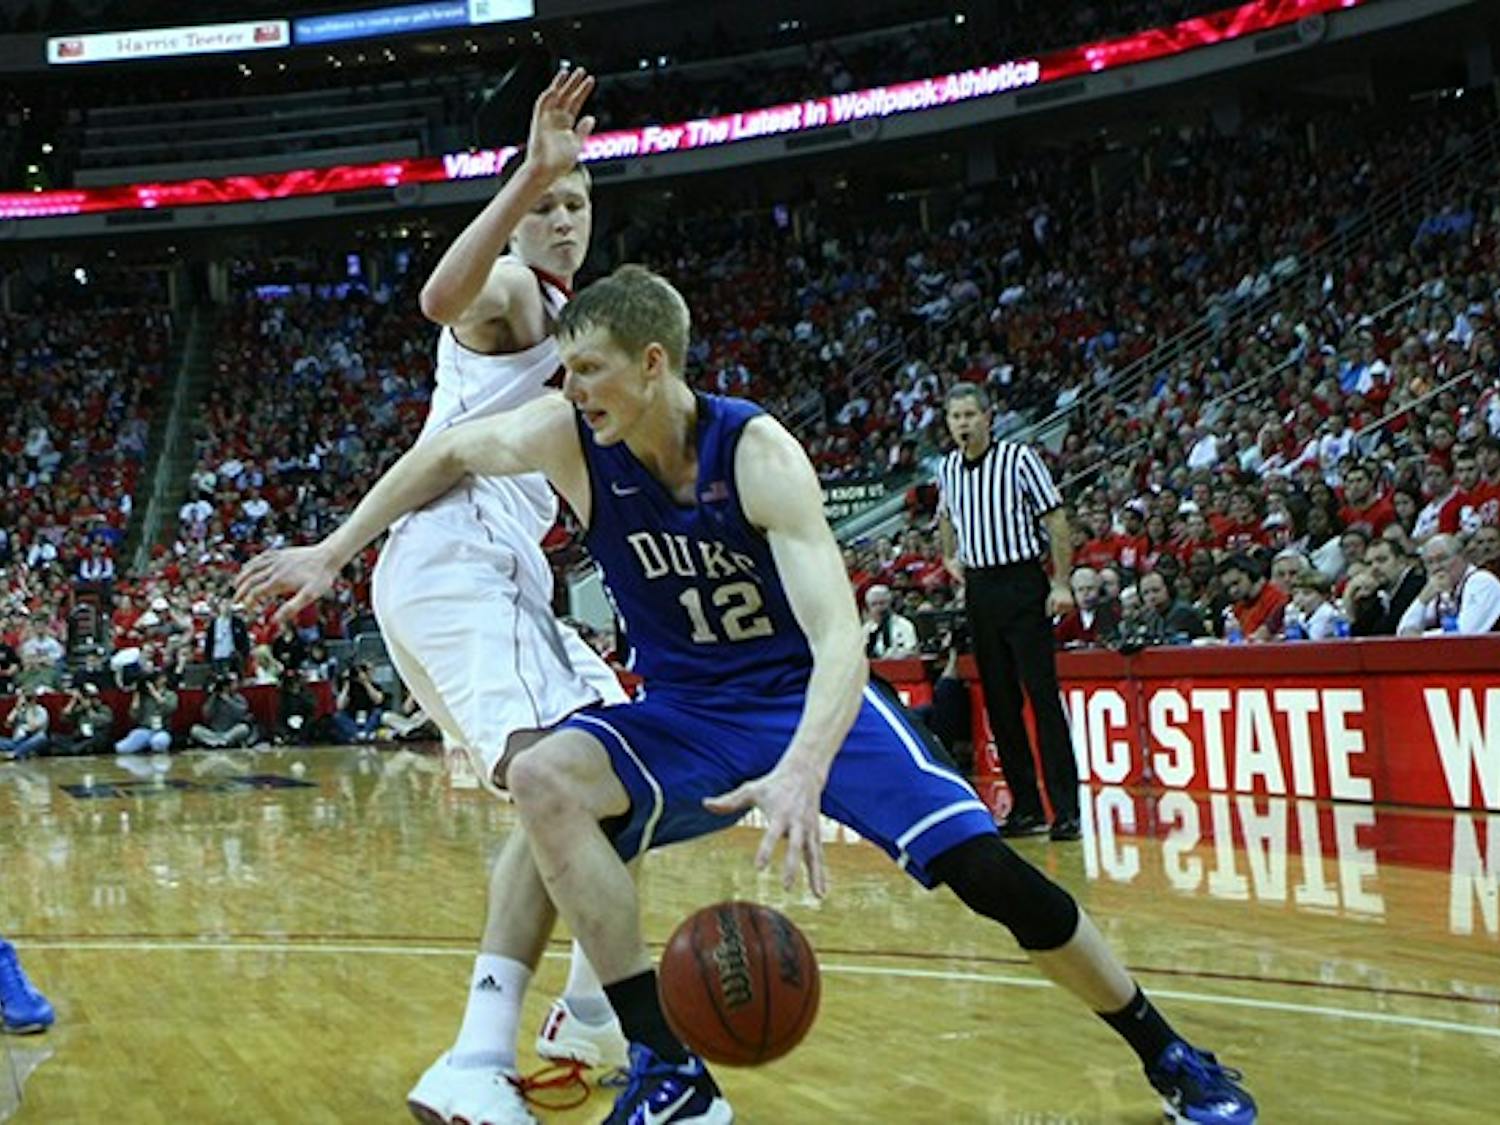 Duke's men's basketball team defeated NC State 92-78 on January 19, 2010. 